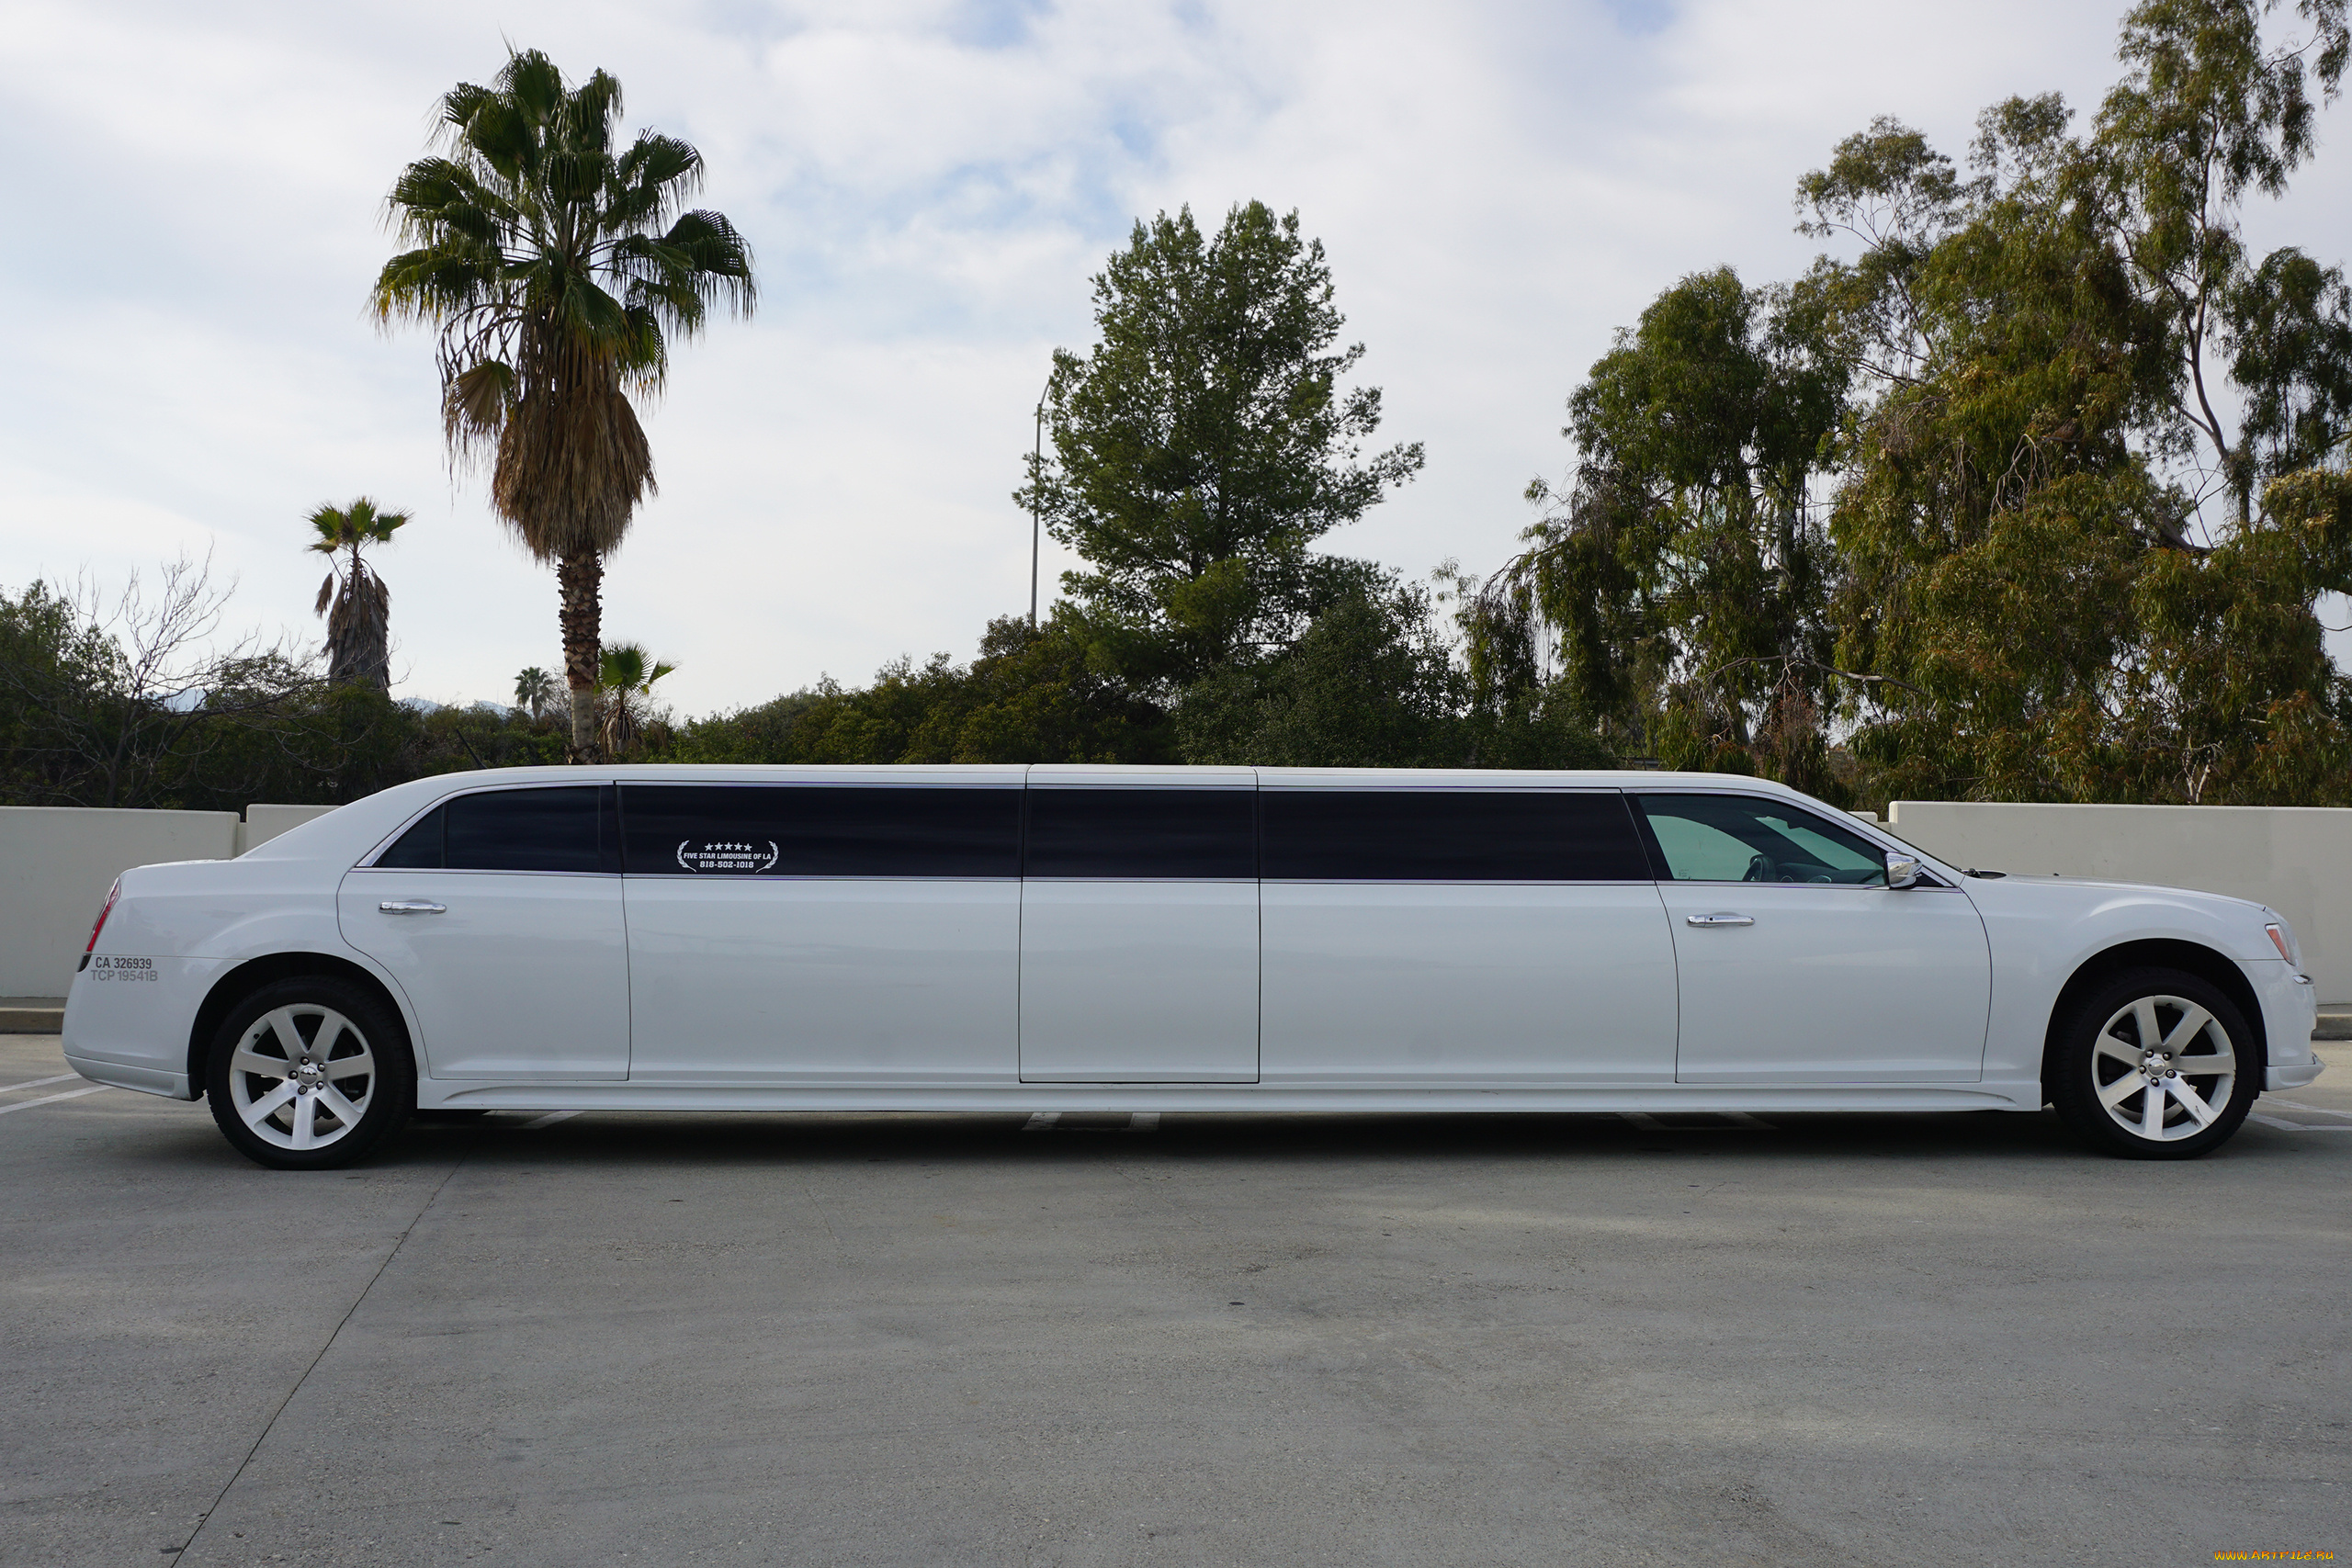 chrysler, 300, limousine, 2016, автомобили, выставки, и, уличные, фото, chrysler, 300, limousine, 2016